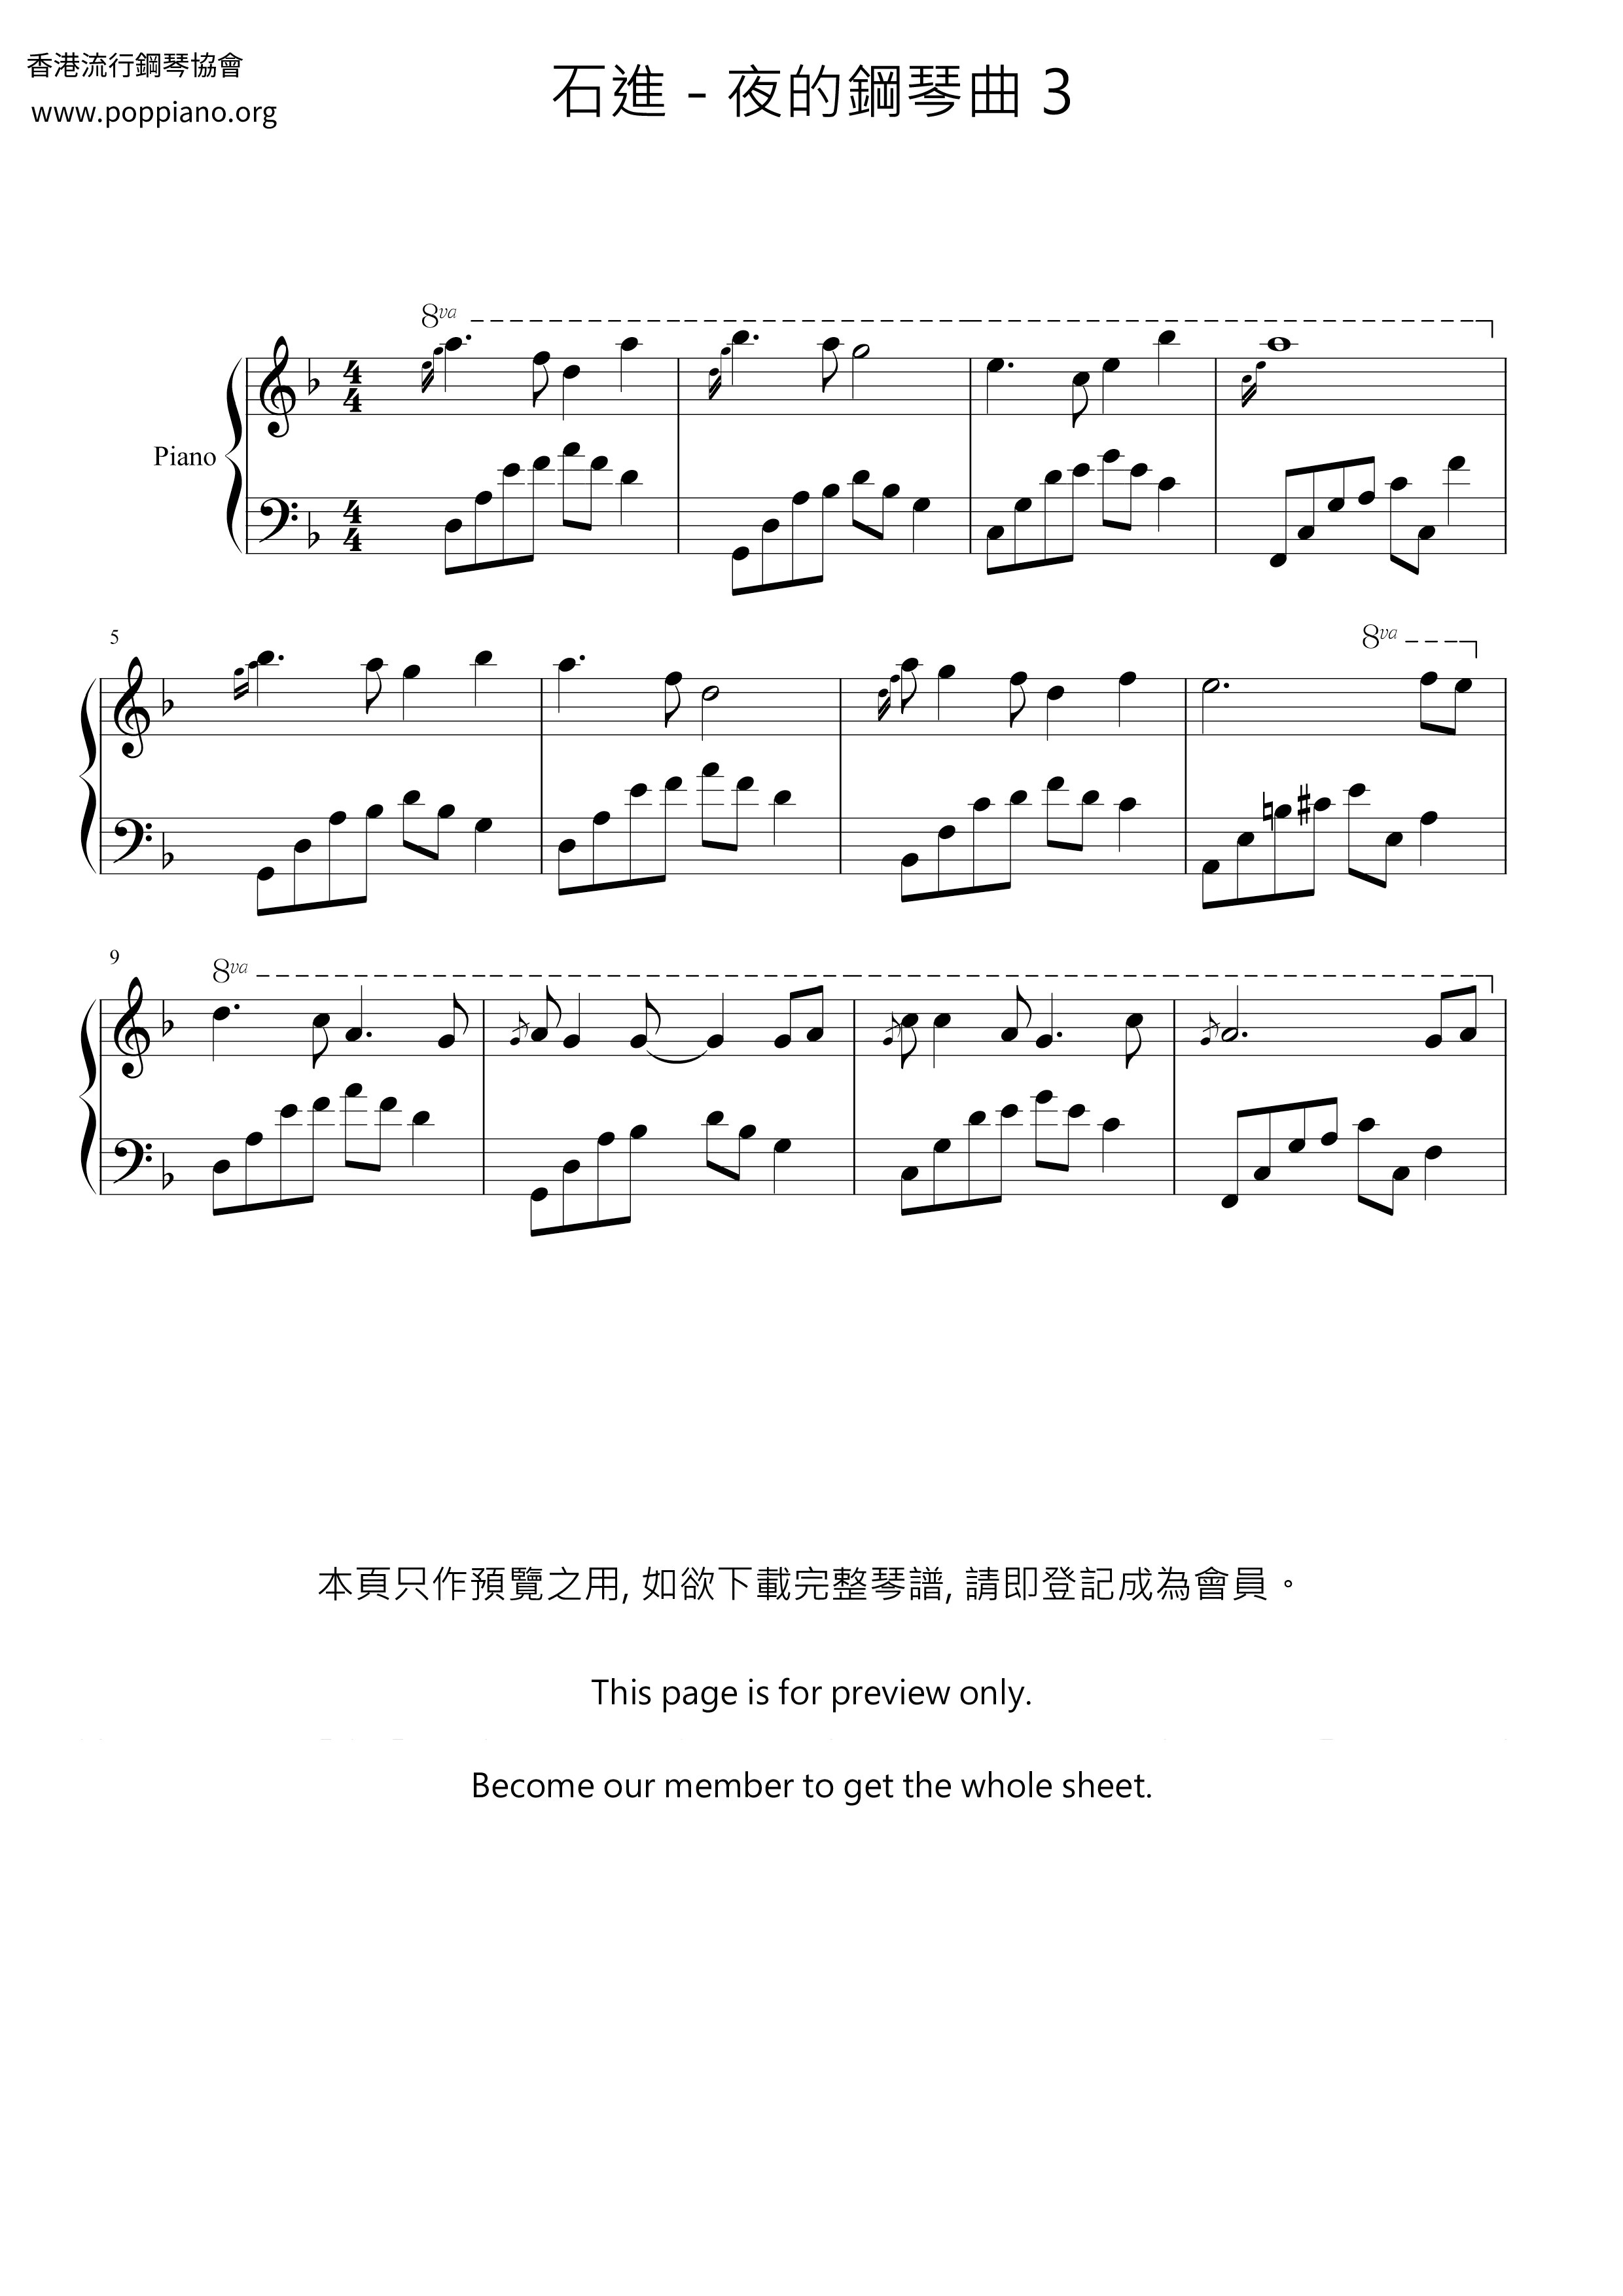 Melody Of The Night 3 Score